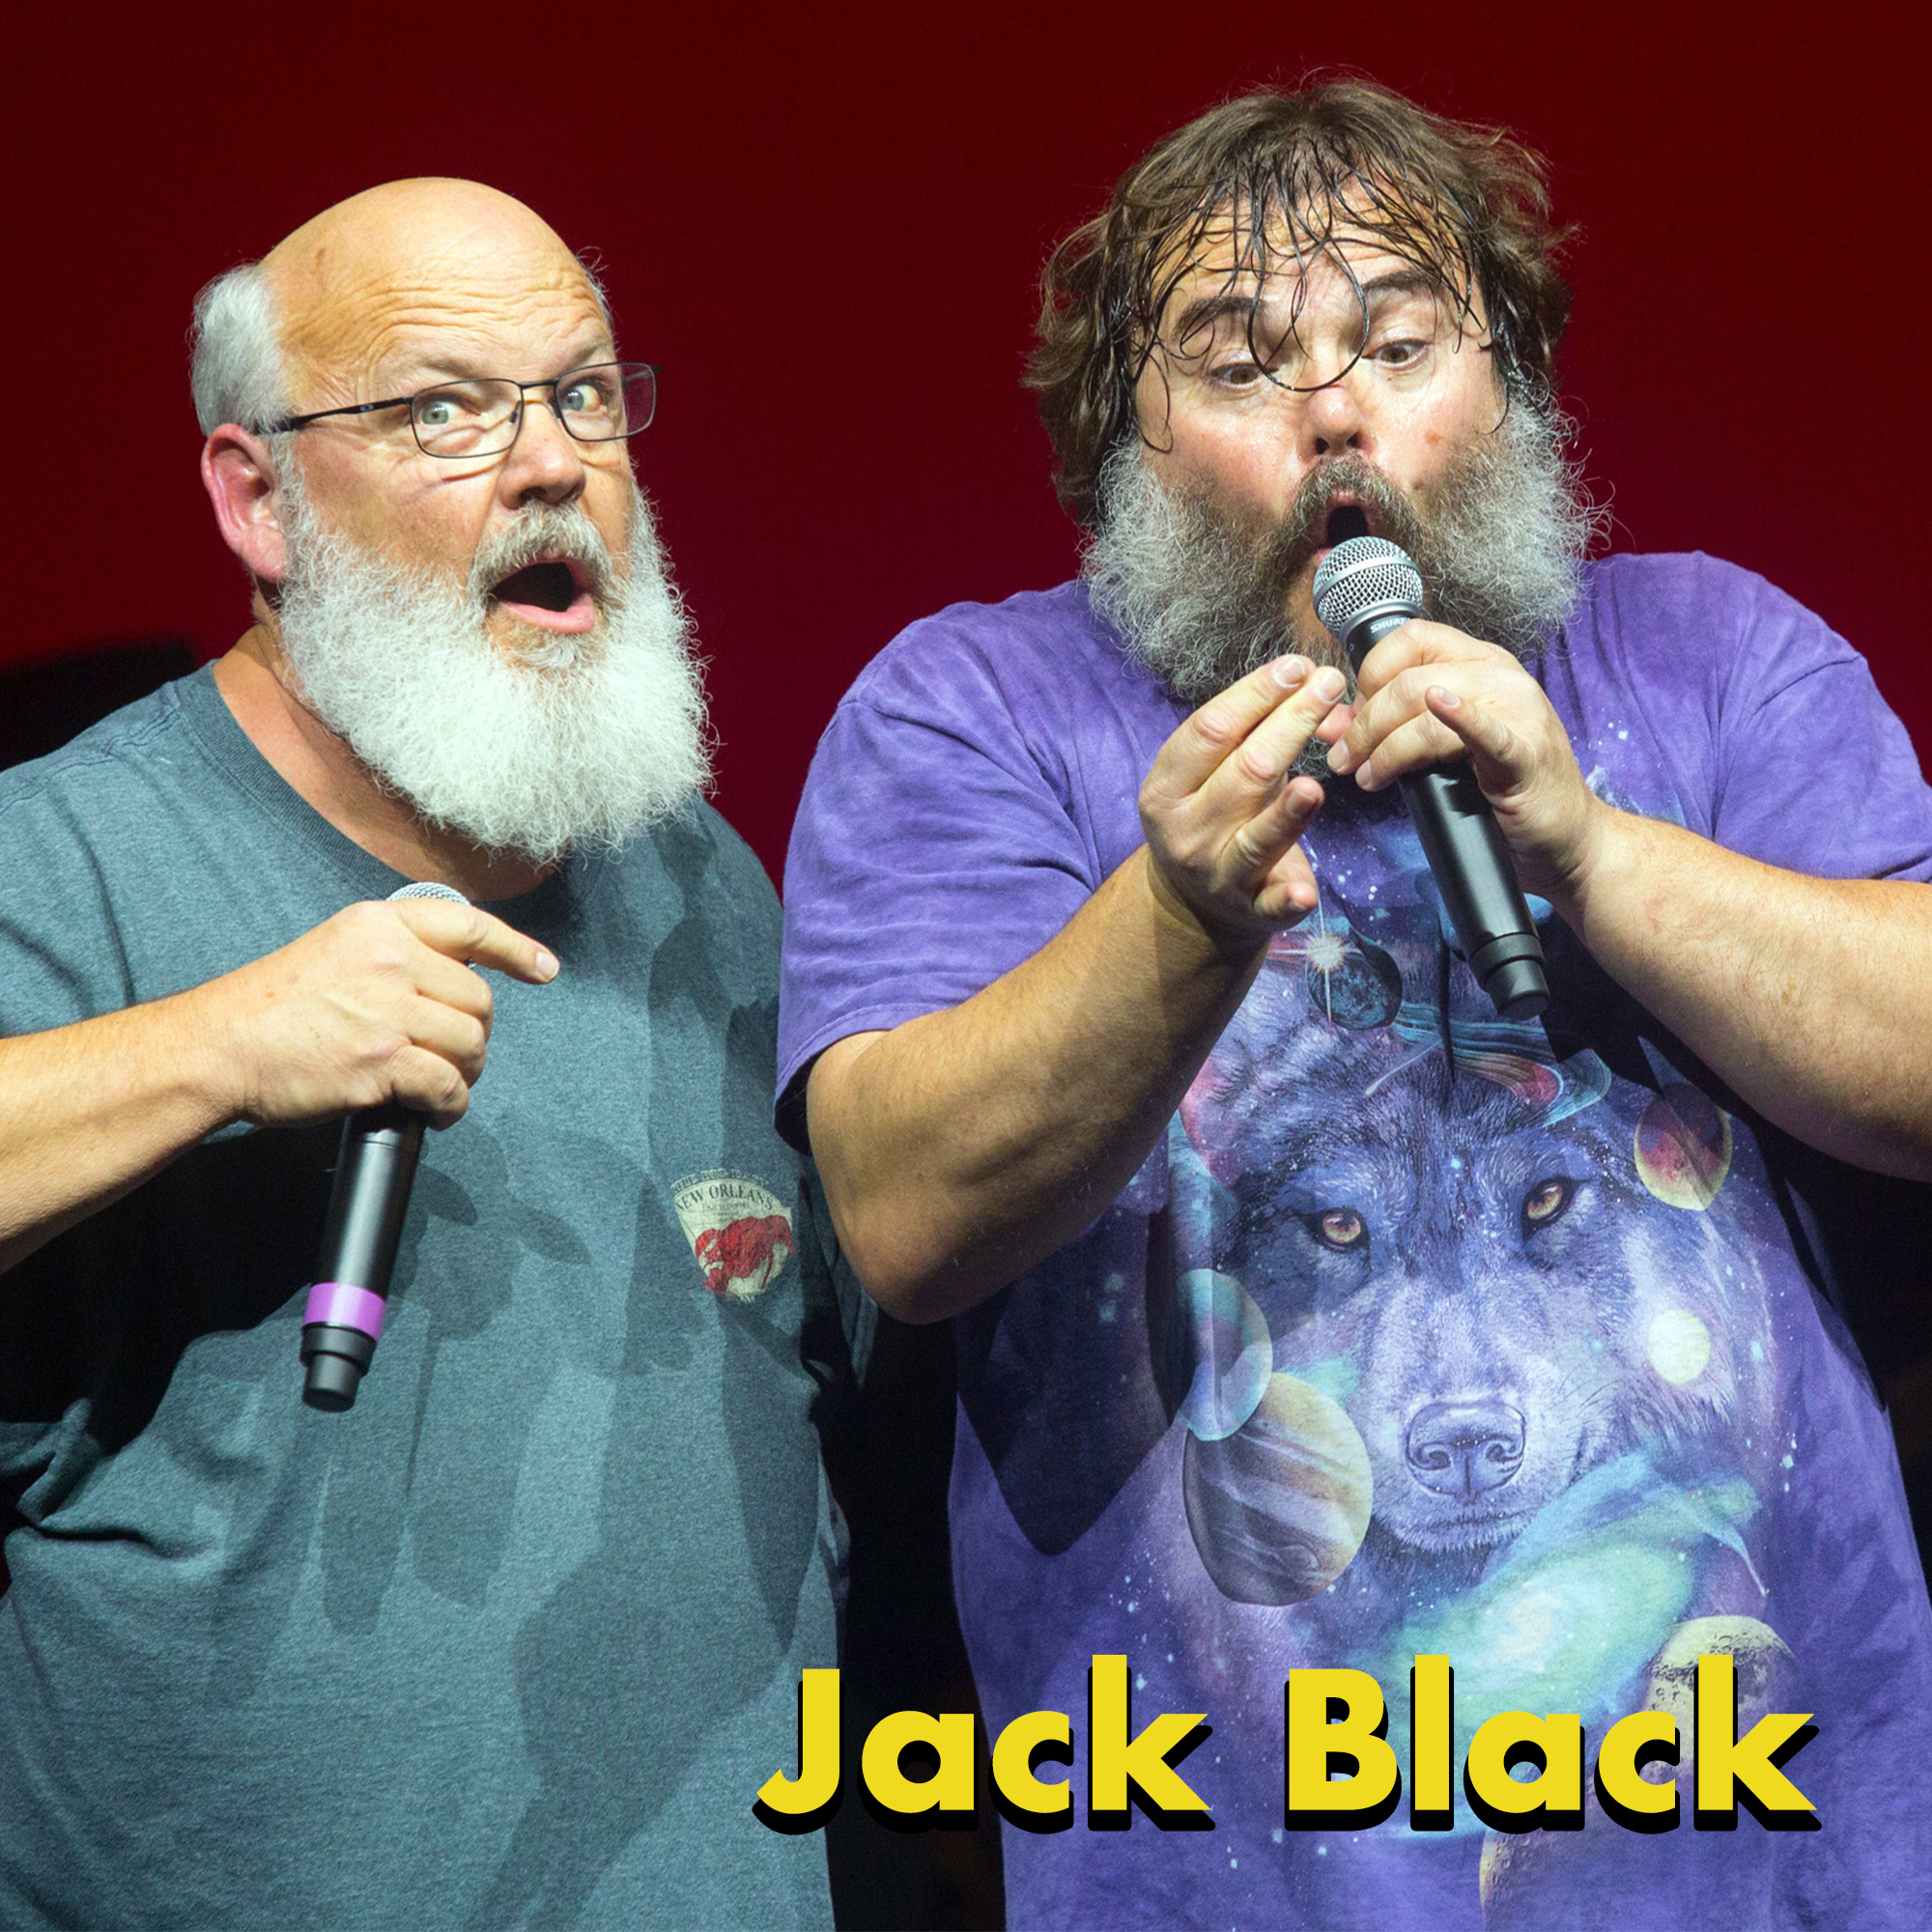 actors in bands - did tenacious d tour - Jack Black